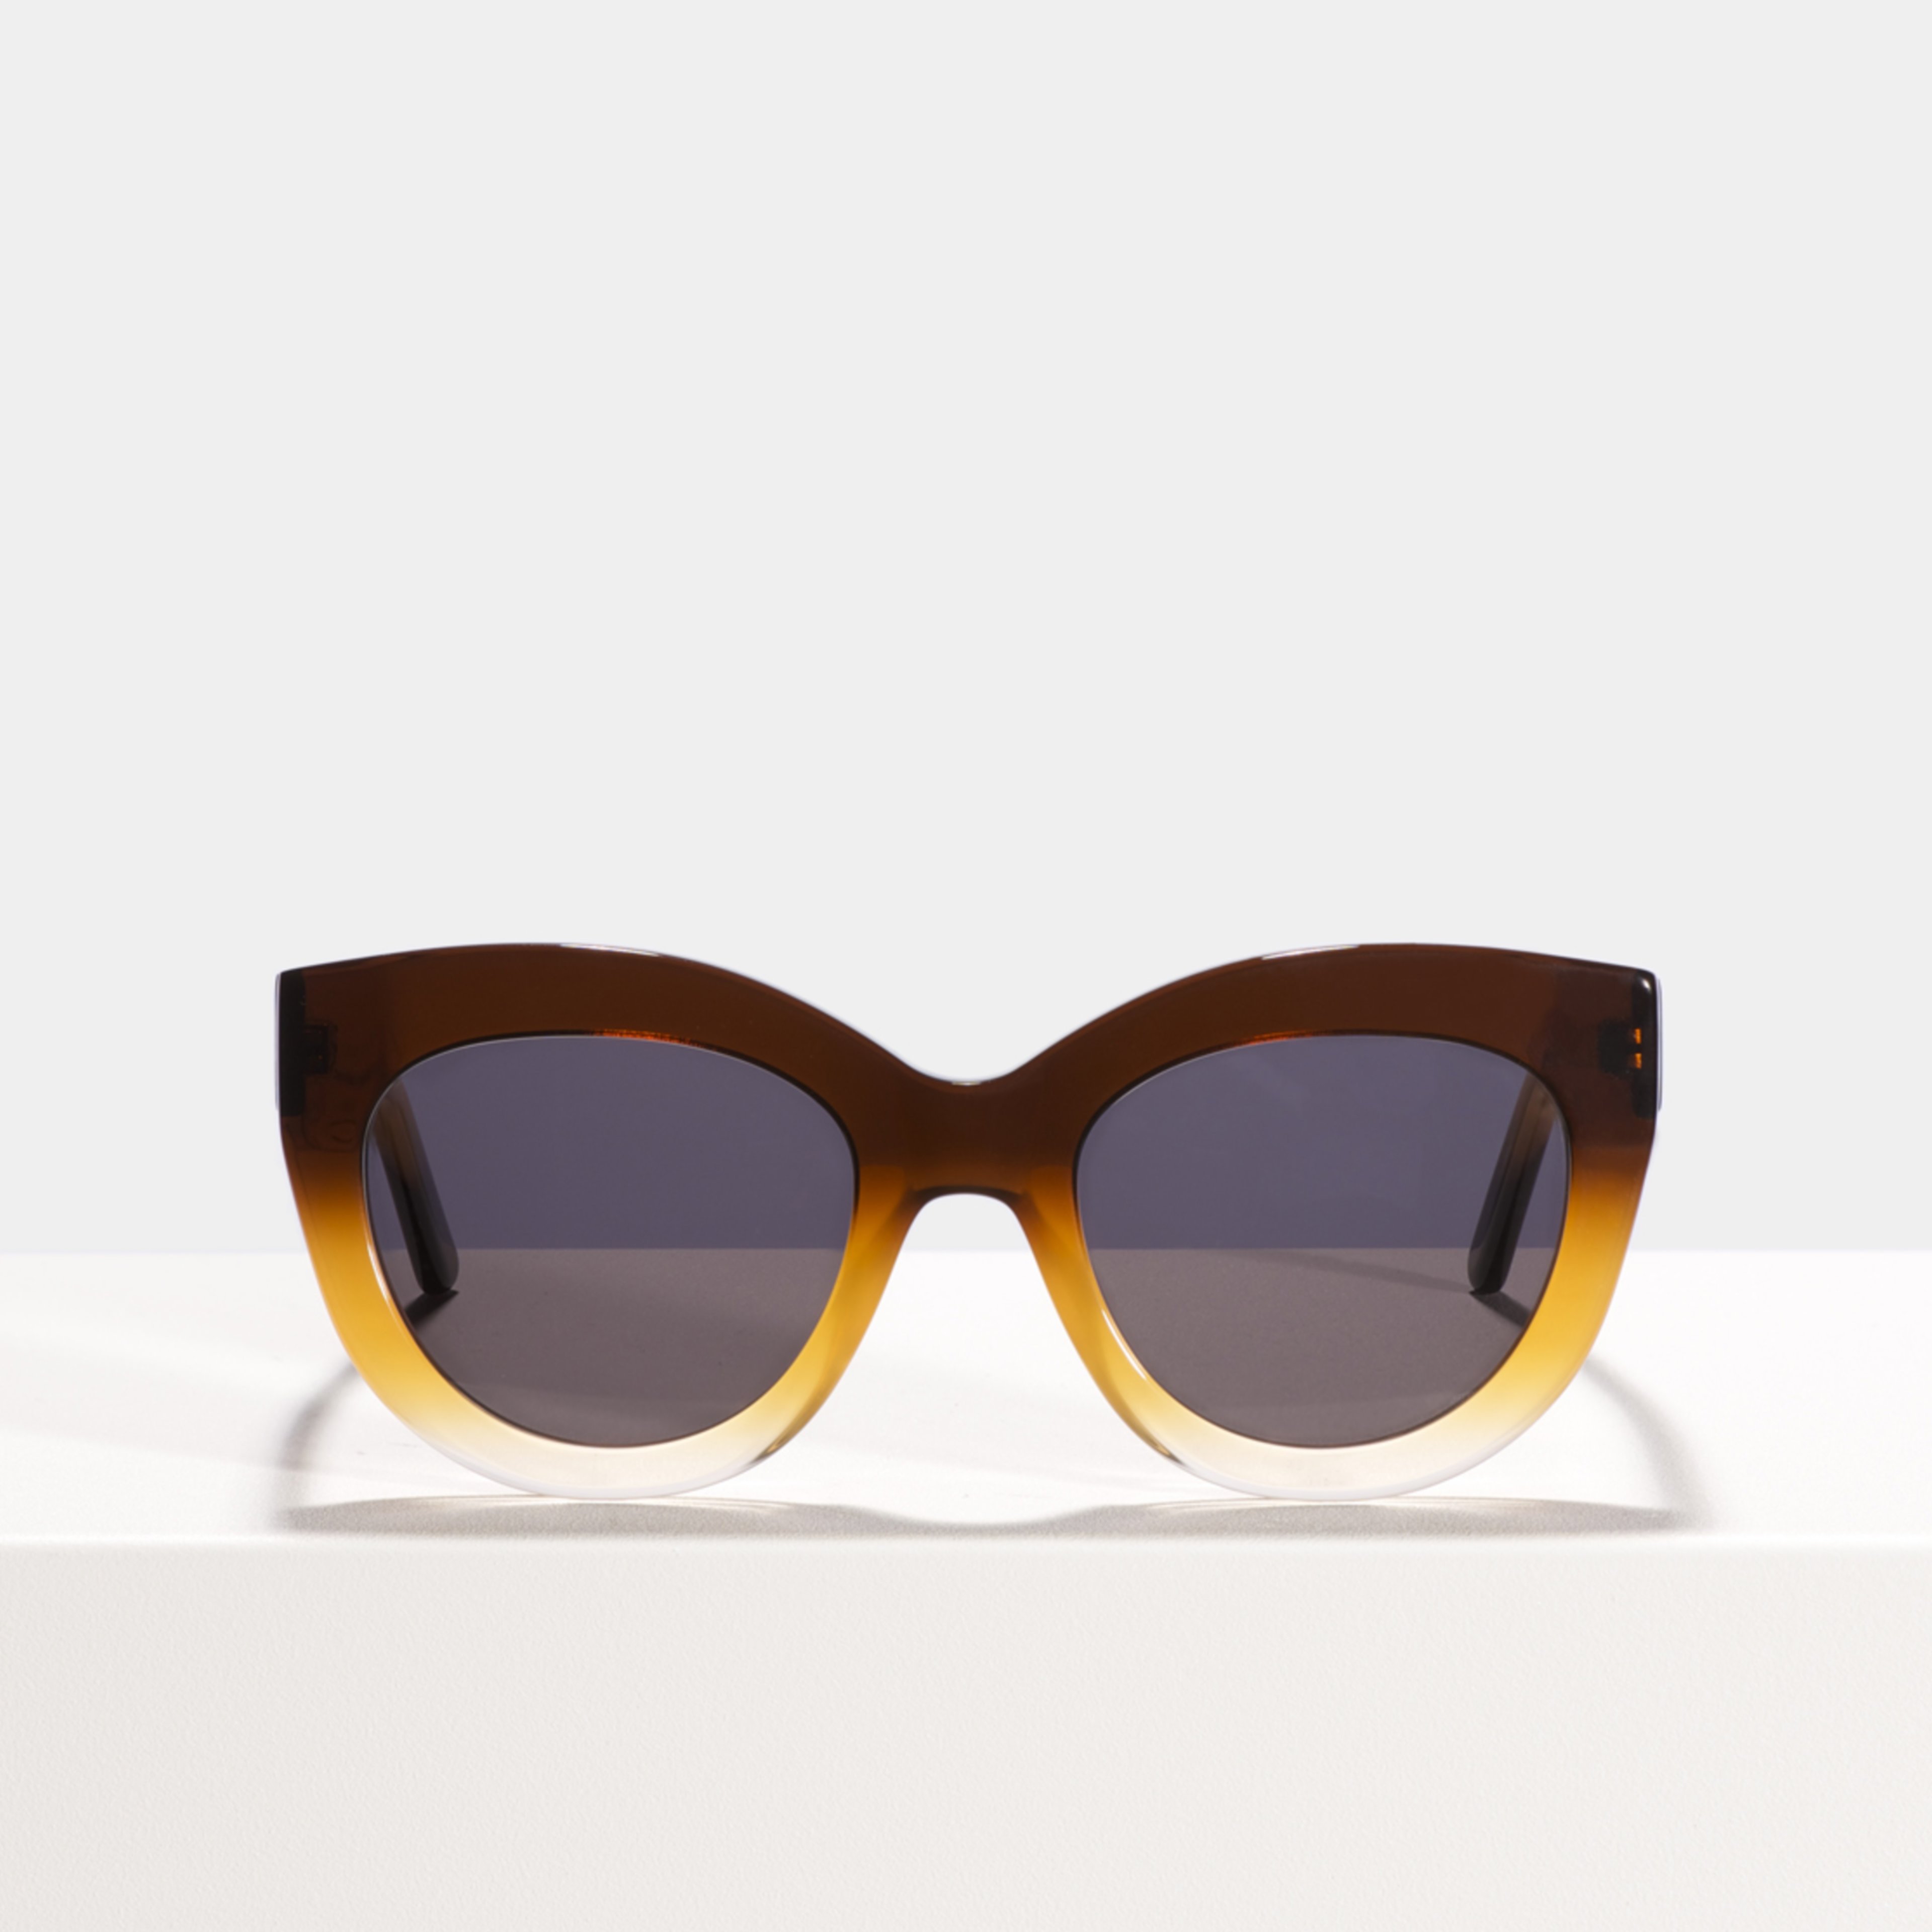 Ace & Tate Gafas de sol |  acetato in Marrón, Naranja